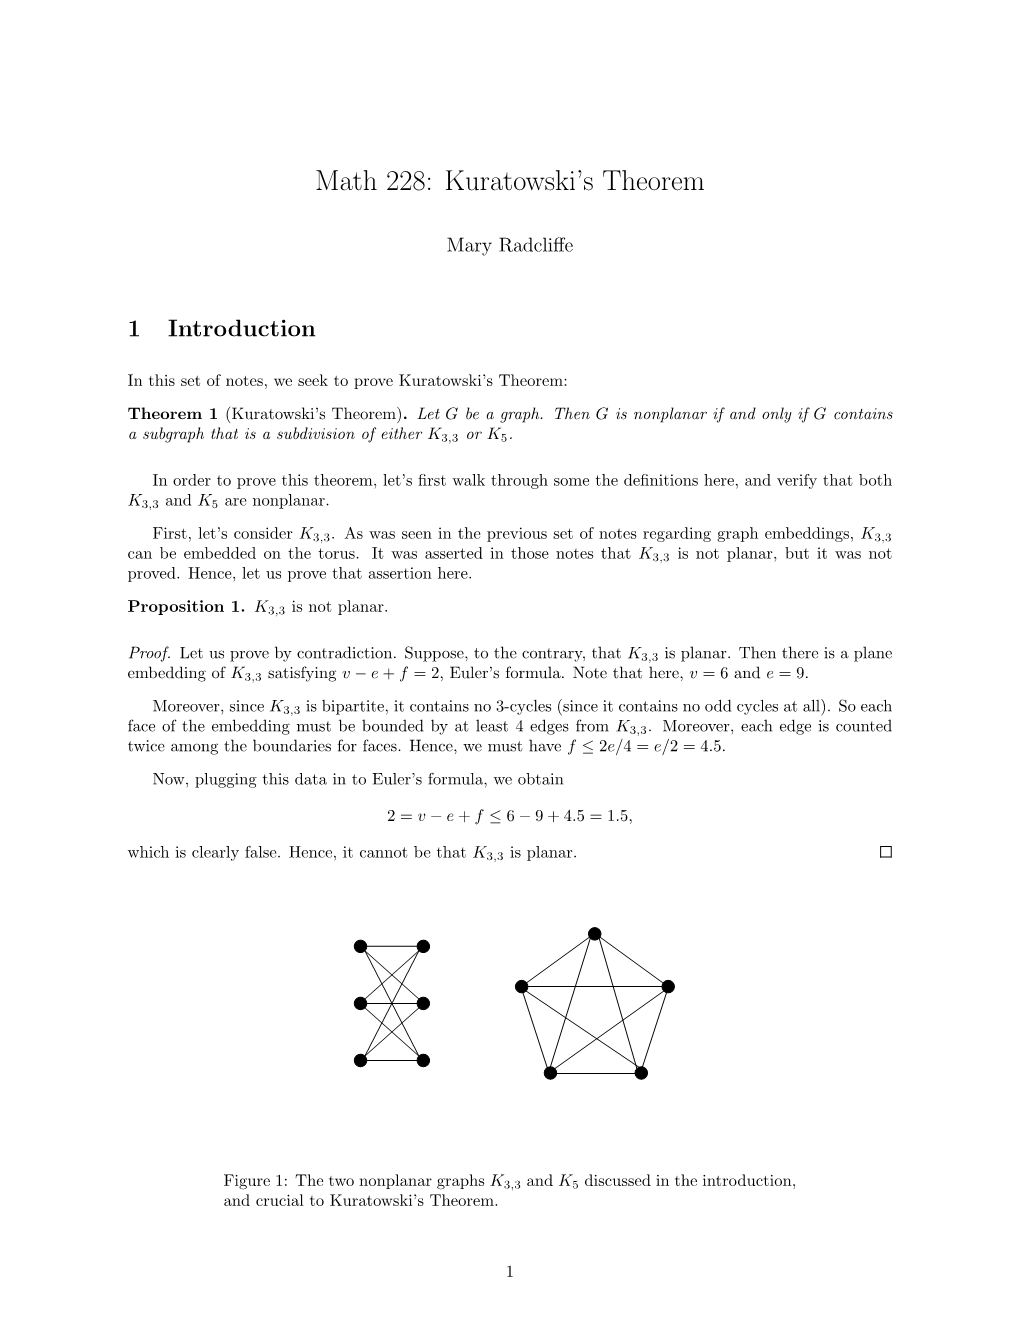 Kuratowski's Theorem